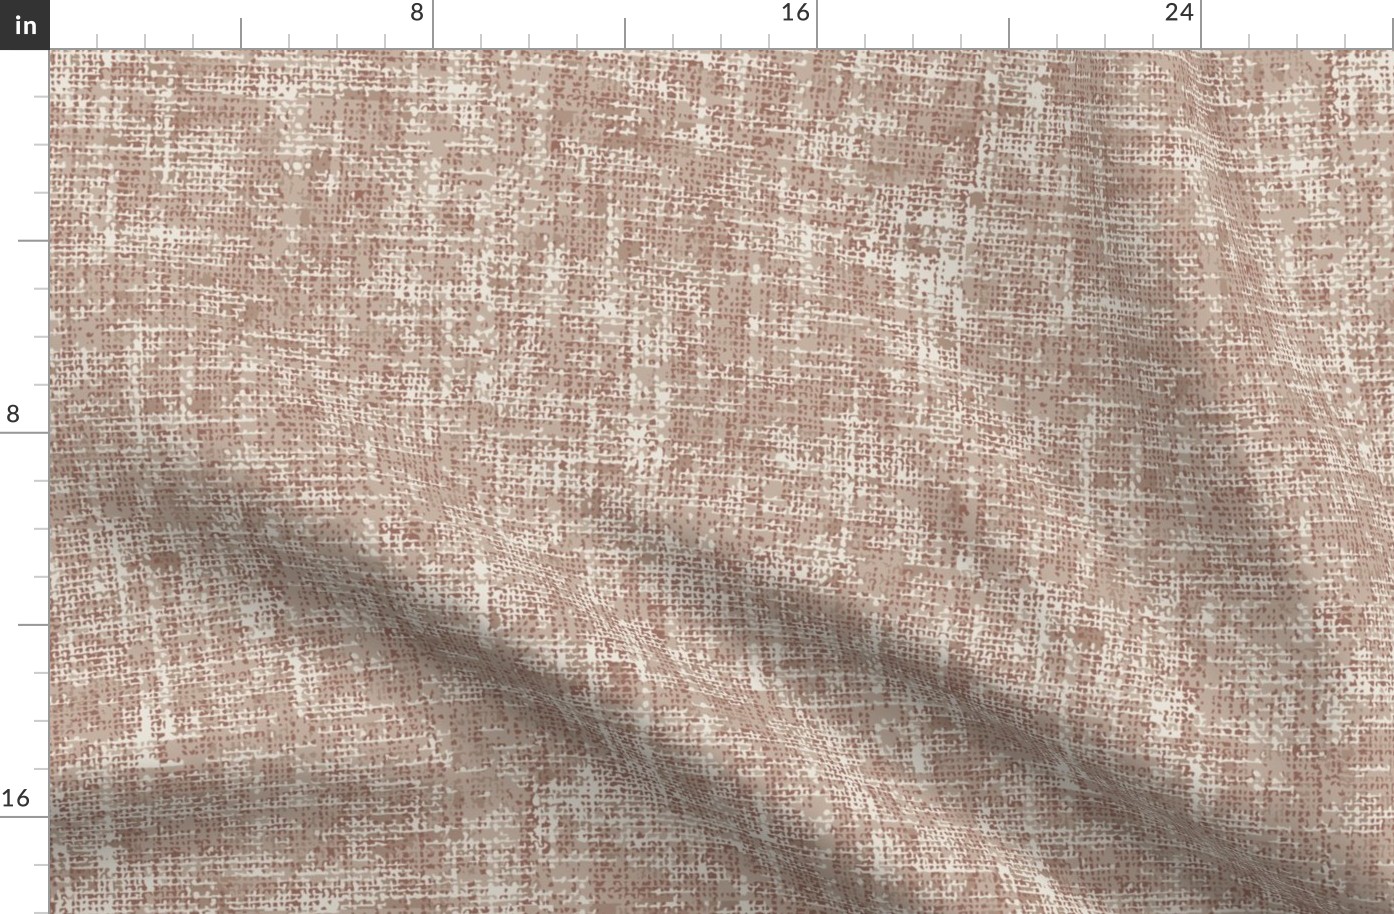 Rustic Linen Texture Canvas Cinnamon Brown Earth Tones